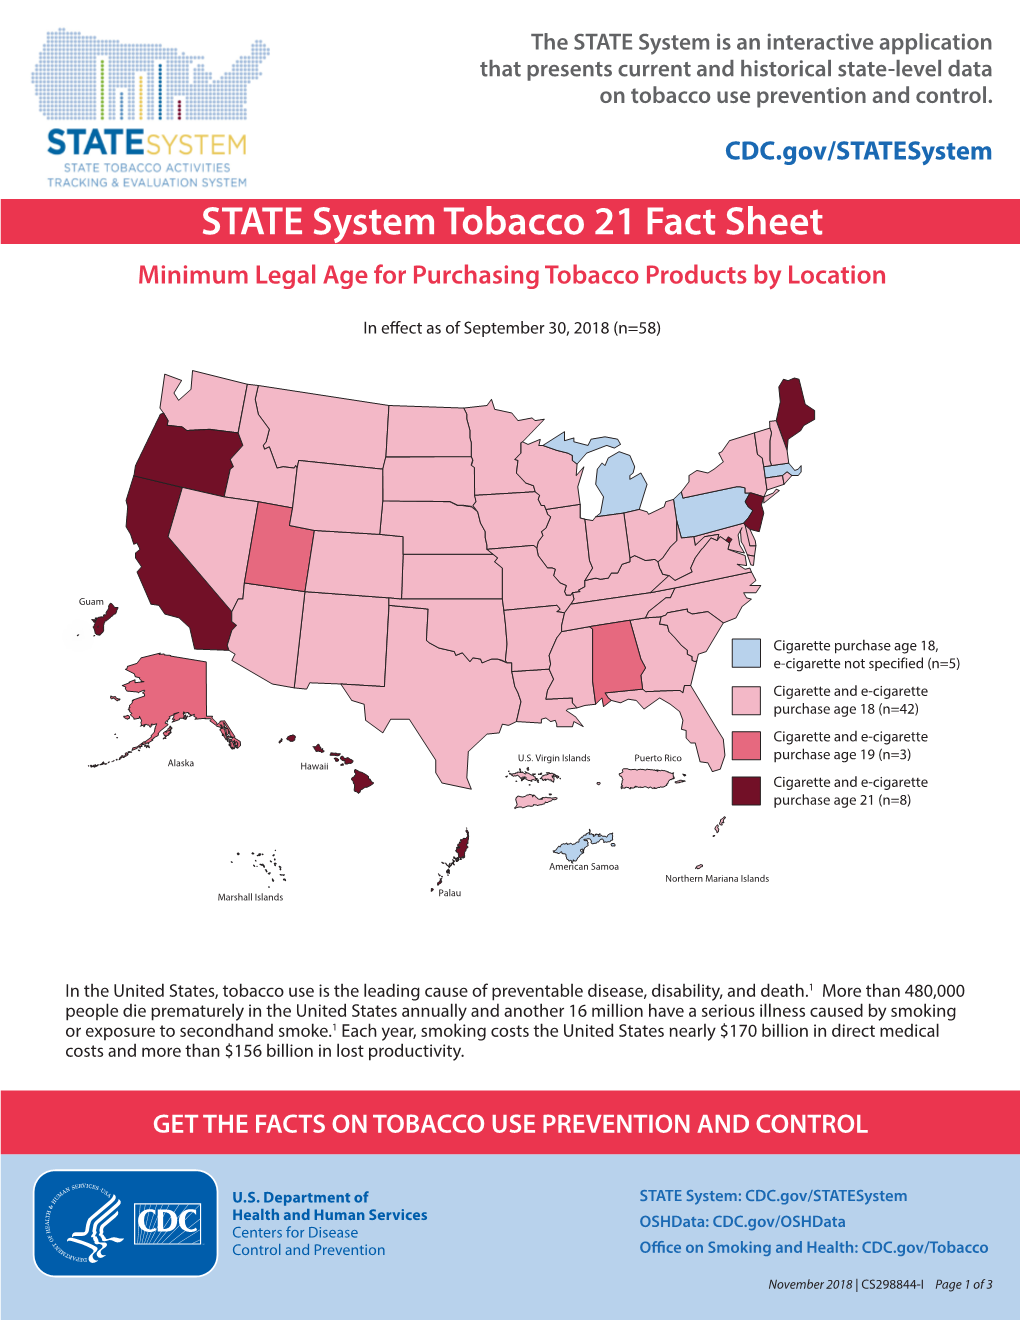 STATE System Tobacco 21 Fact Sheet, November 2018